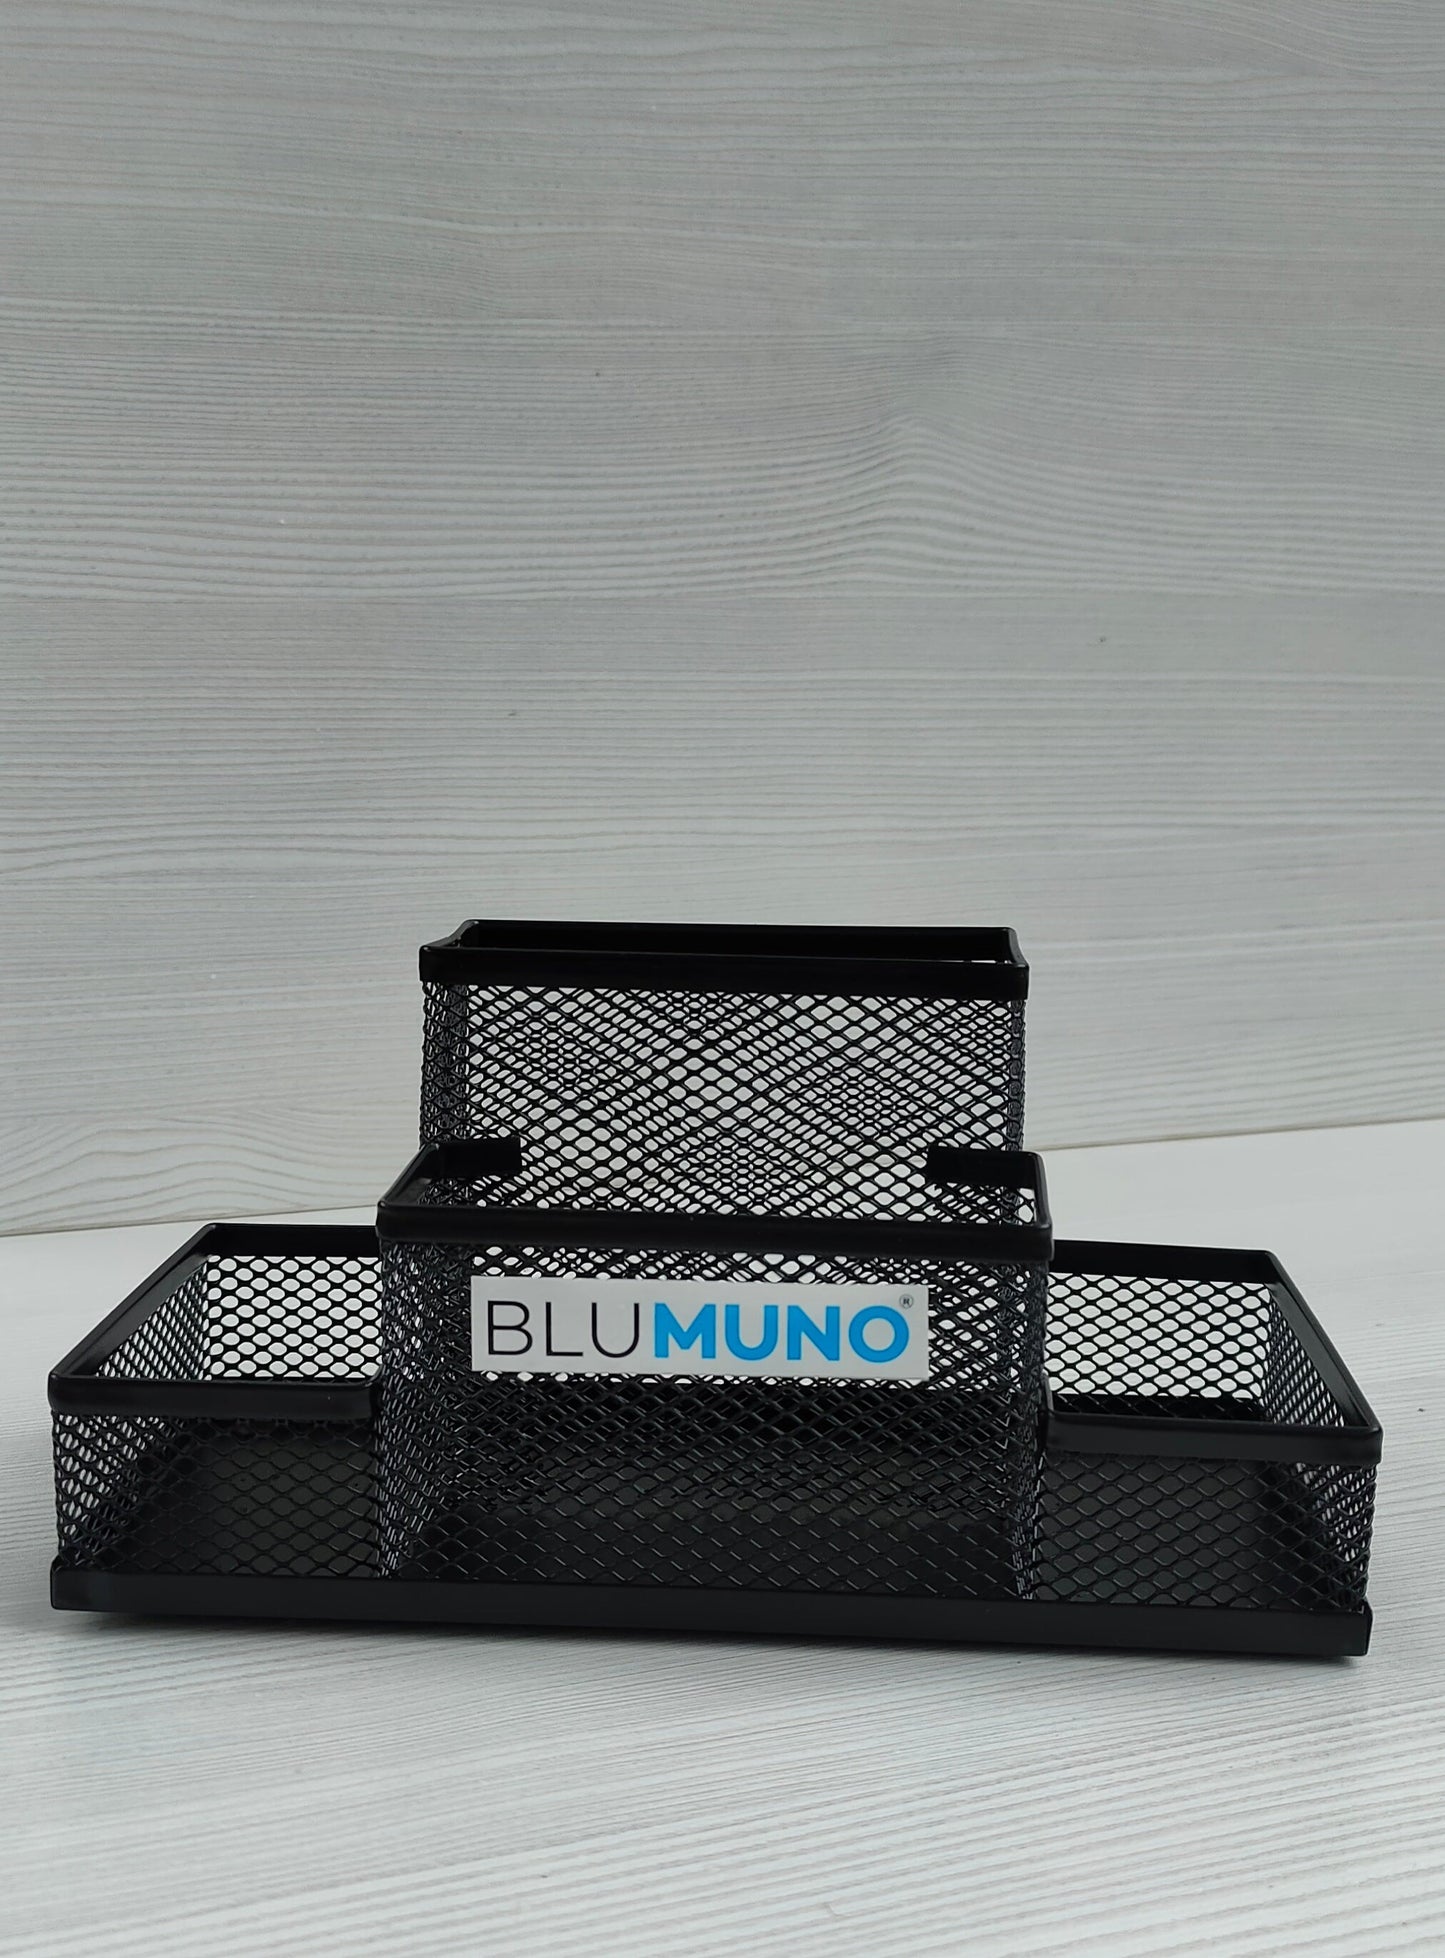 Blumuno Ampio Desk Organizer (4 Compartment)